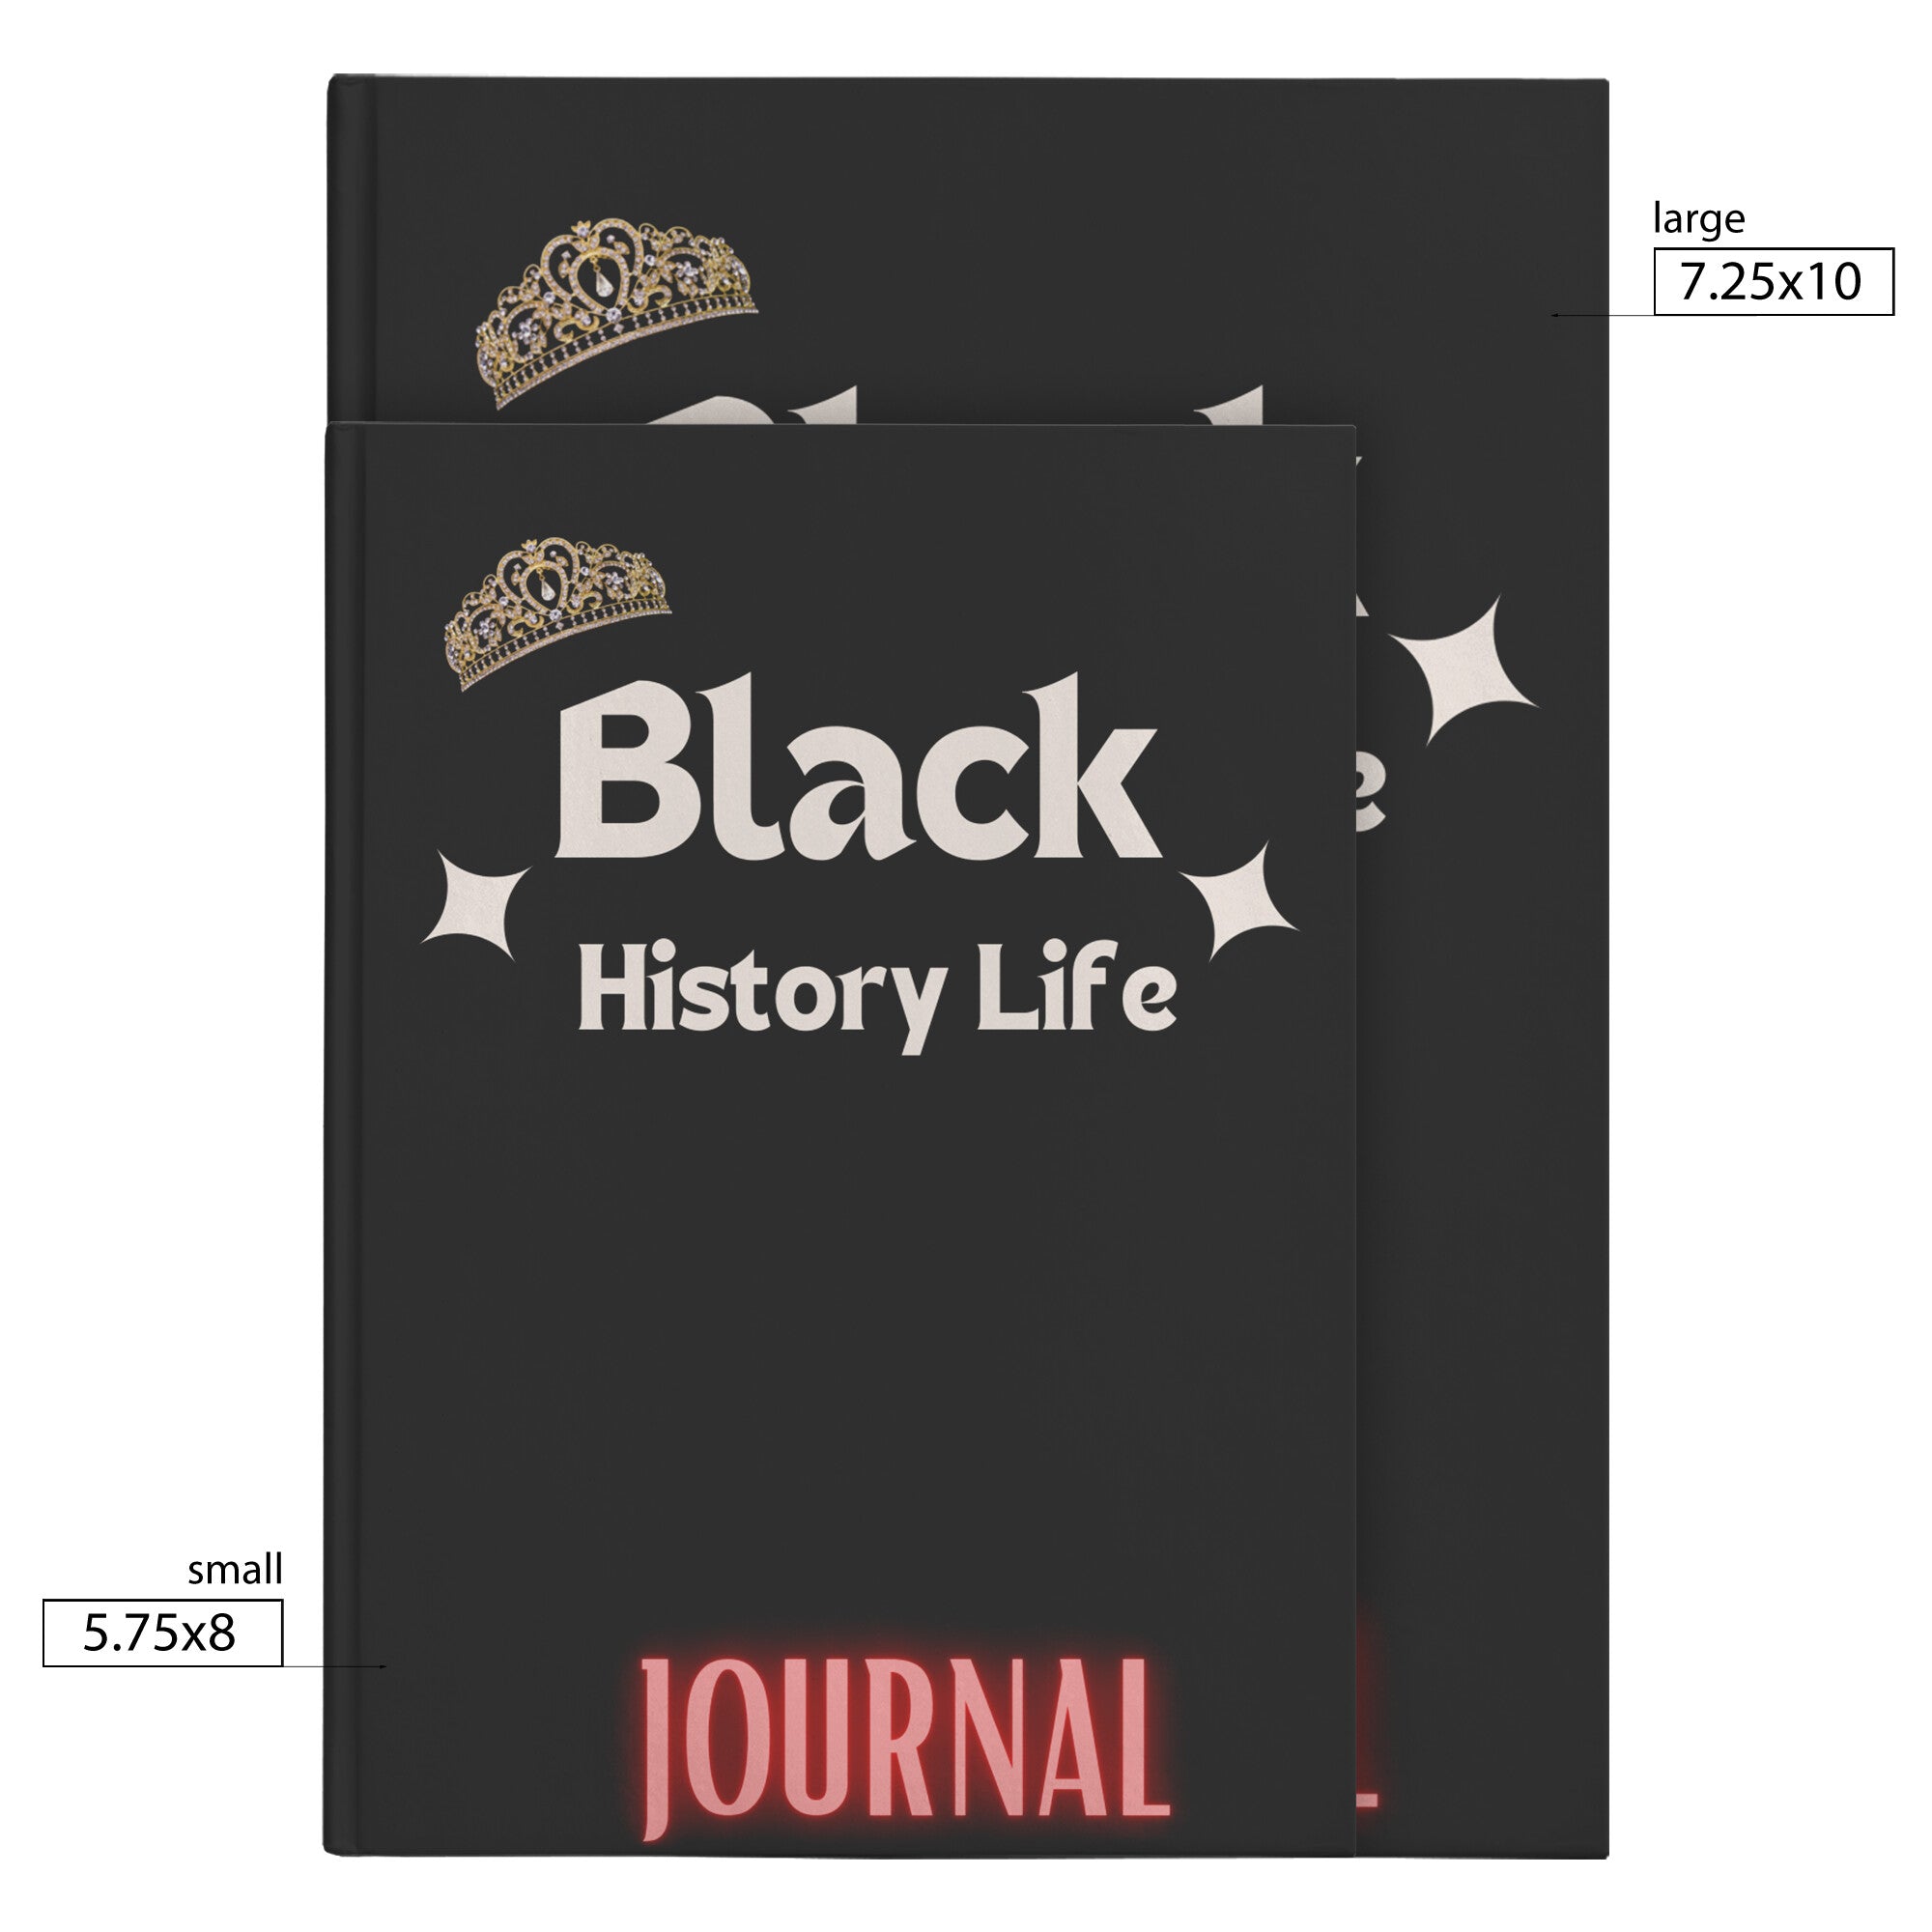 Black History Life